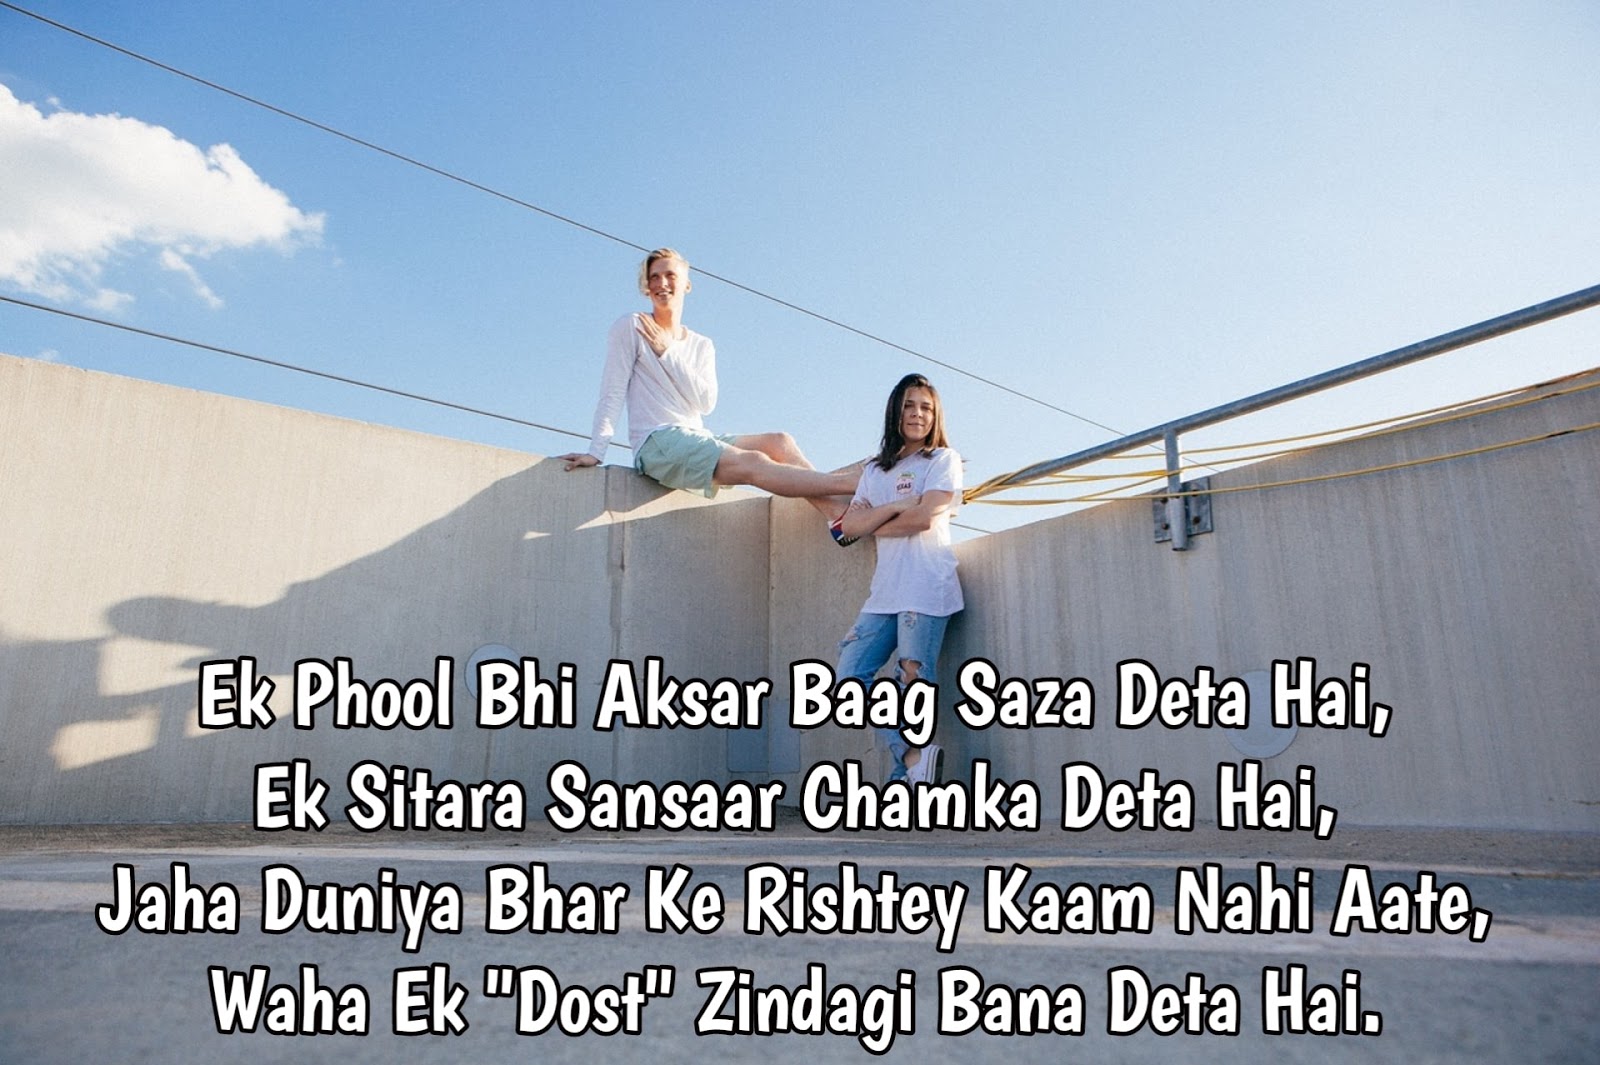 Best Hindi Friendship Shayari, Quotes, Images, Wallpaper - Whatsapp Status  For Friendship Day - 1600x1065 Wallpaper 